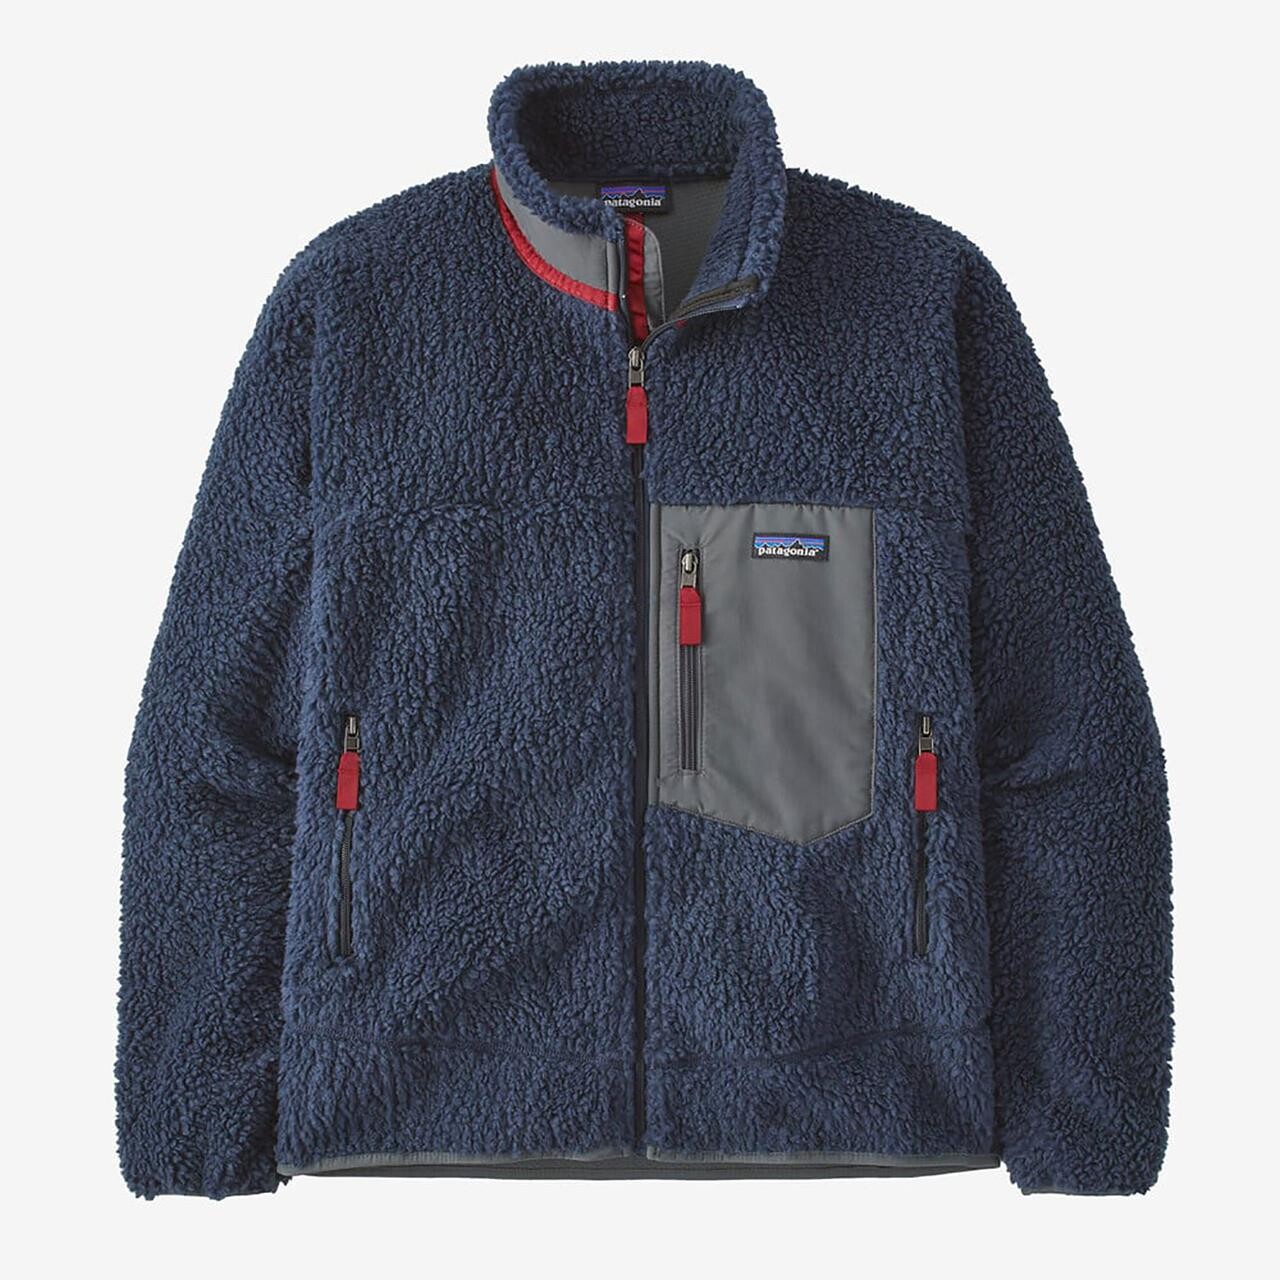 Patagonia Mens Classic Retro-X Jacket  (Blå (NEW NAVY/WAX RED) Medium)